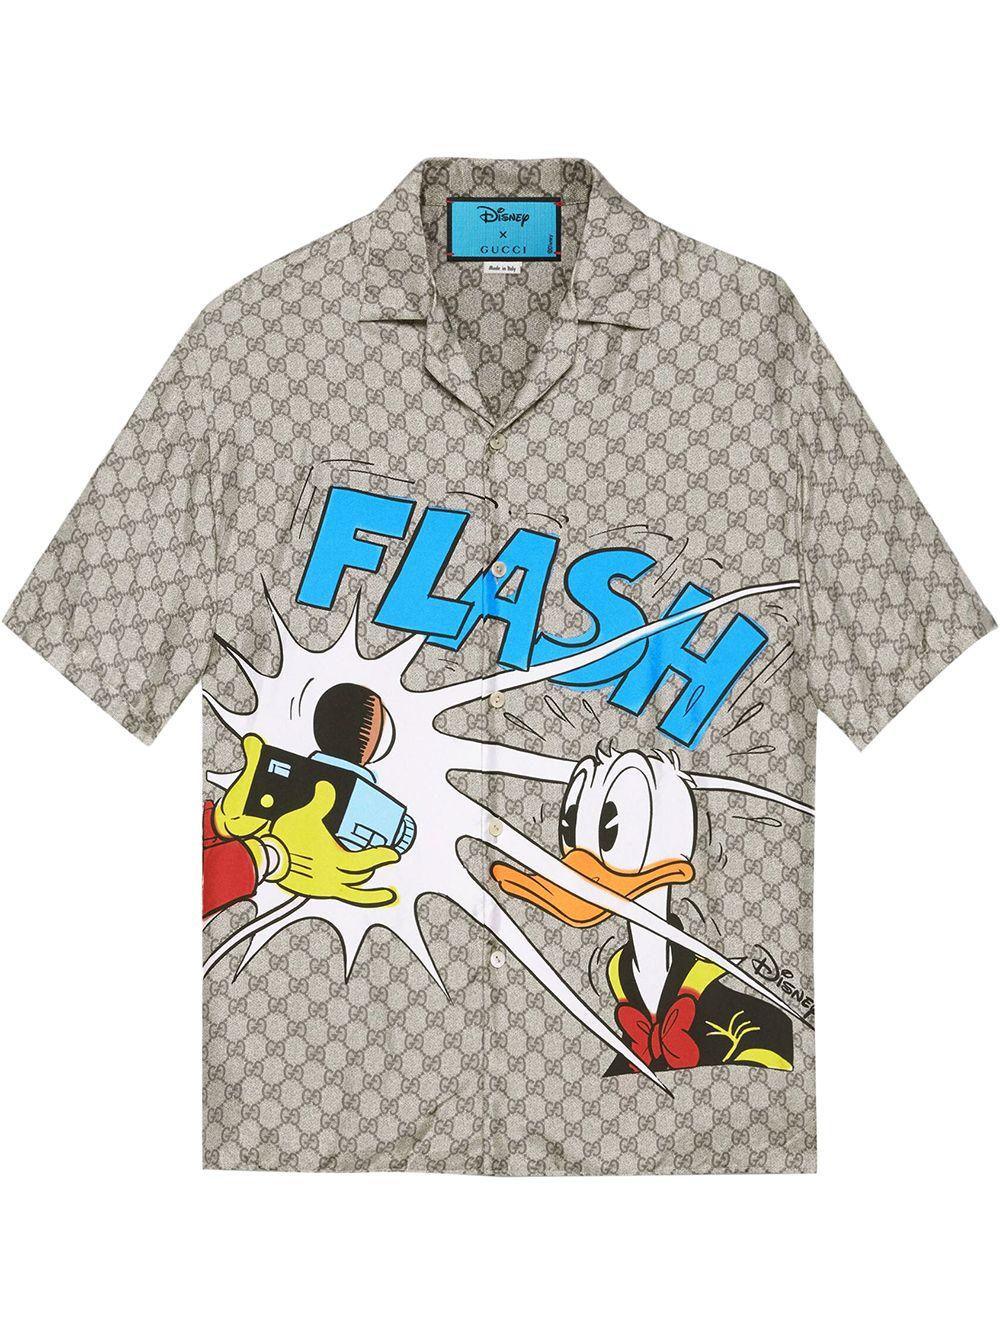 gucci donald duck shirt